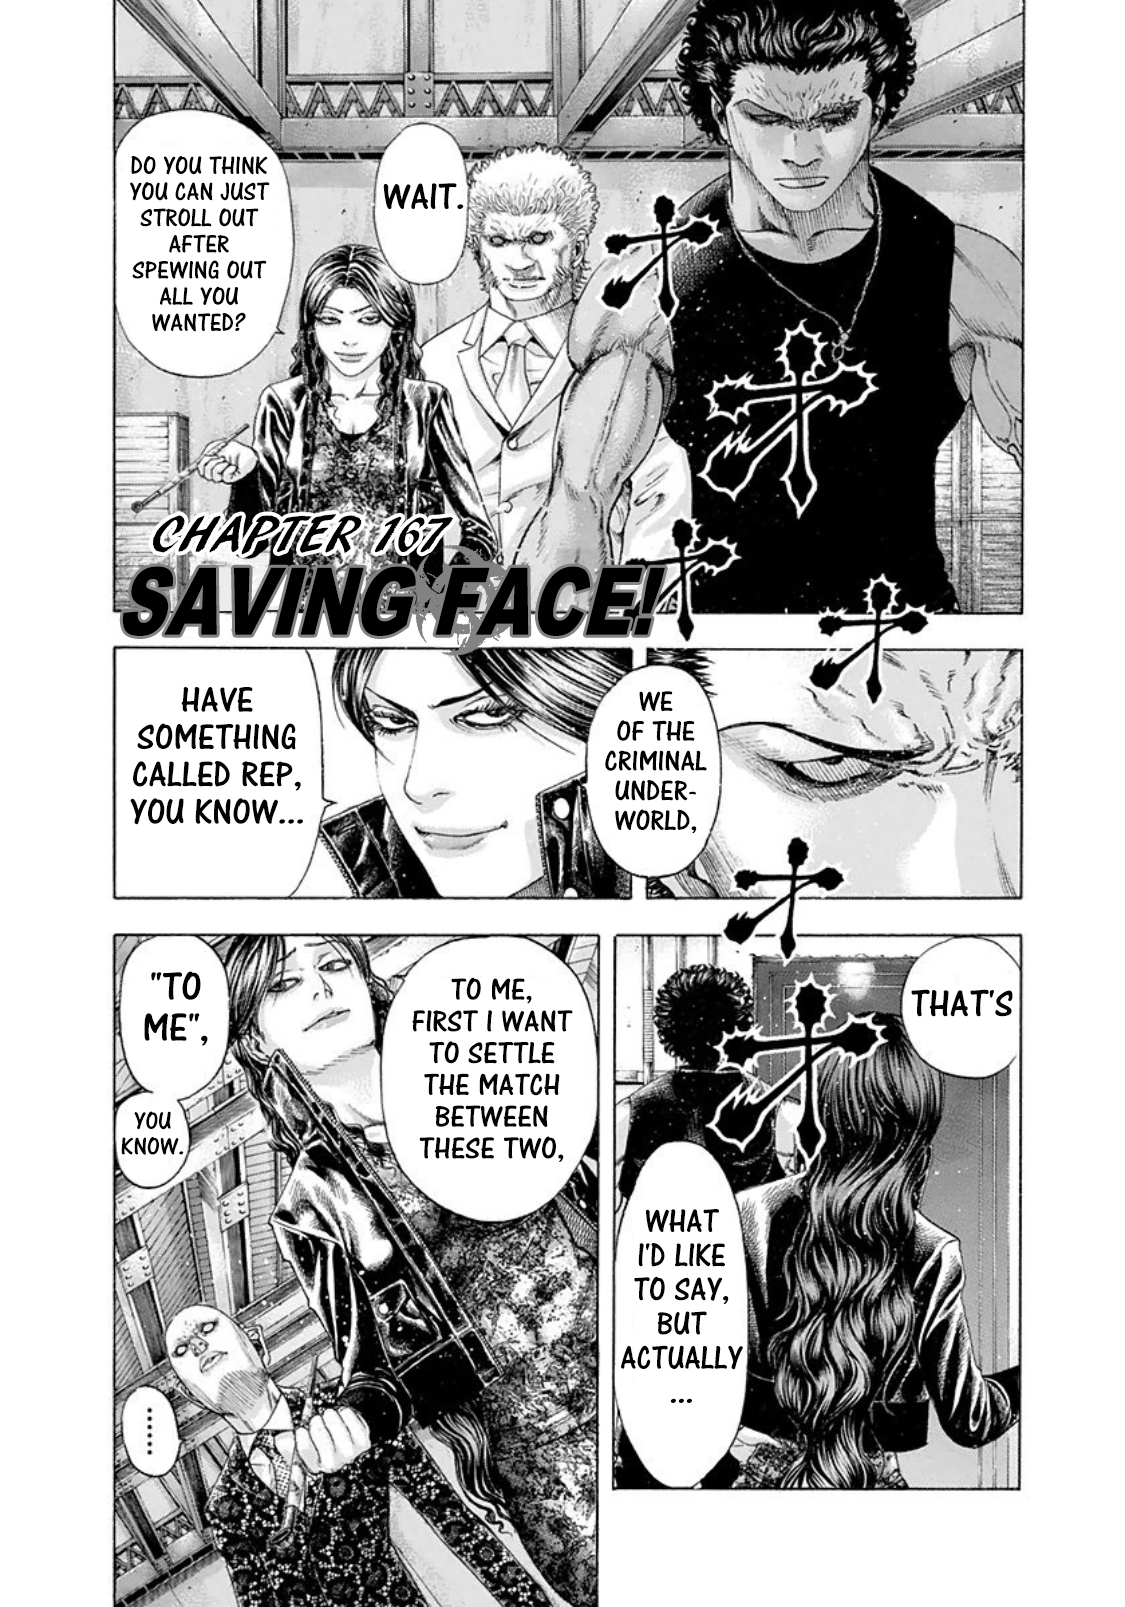 Usogui Vol. 16 Ch. 167 Saving Face!